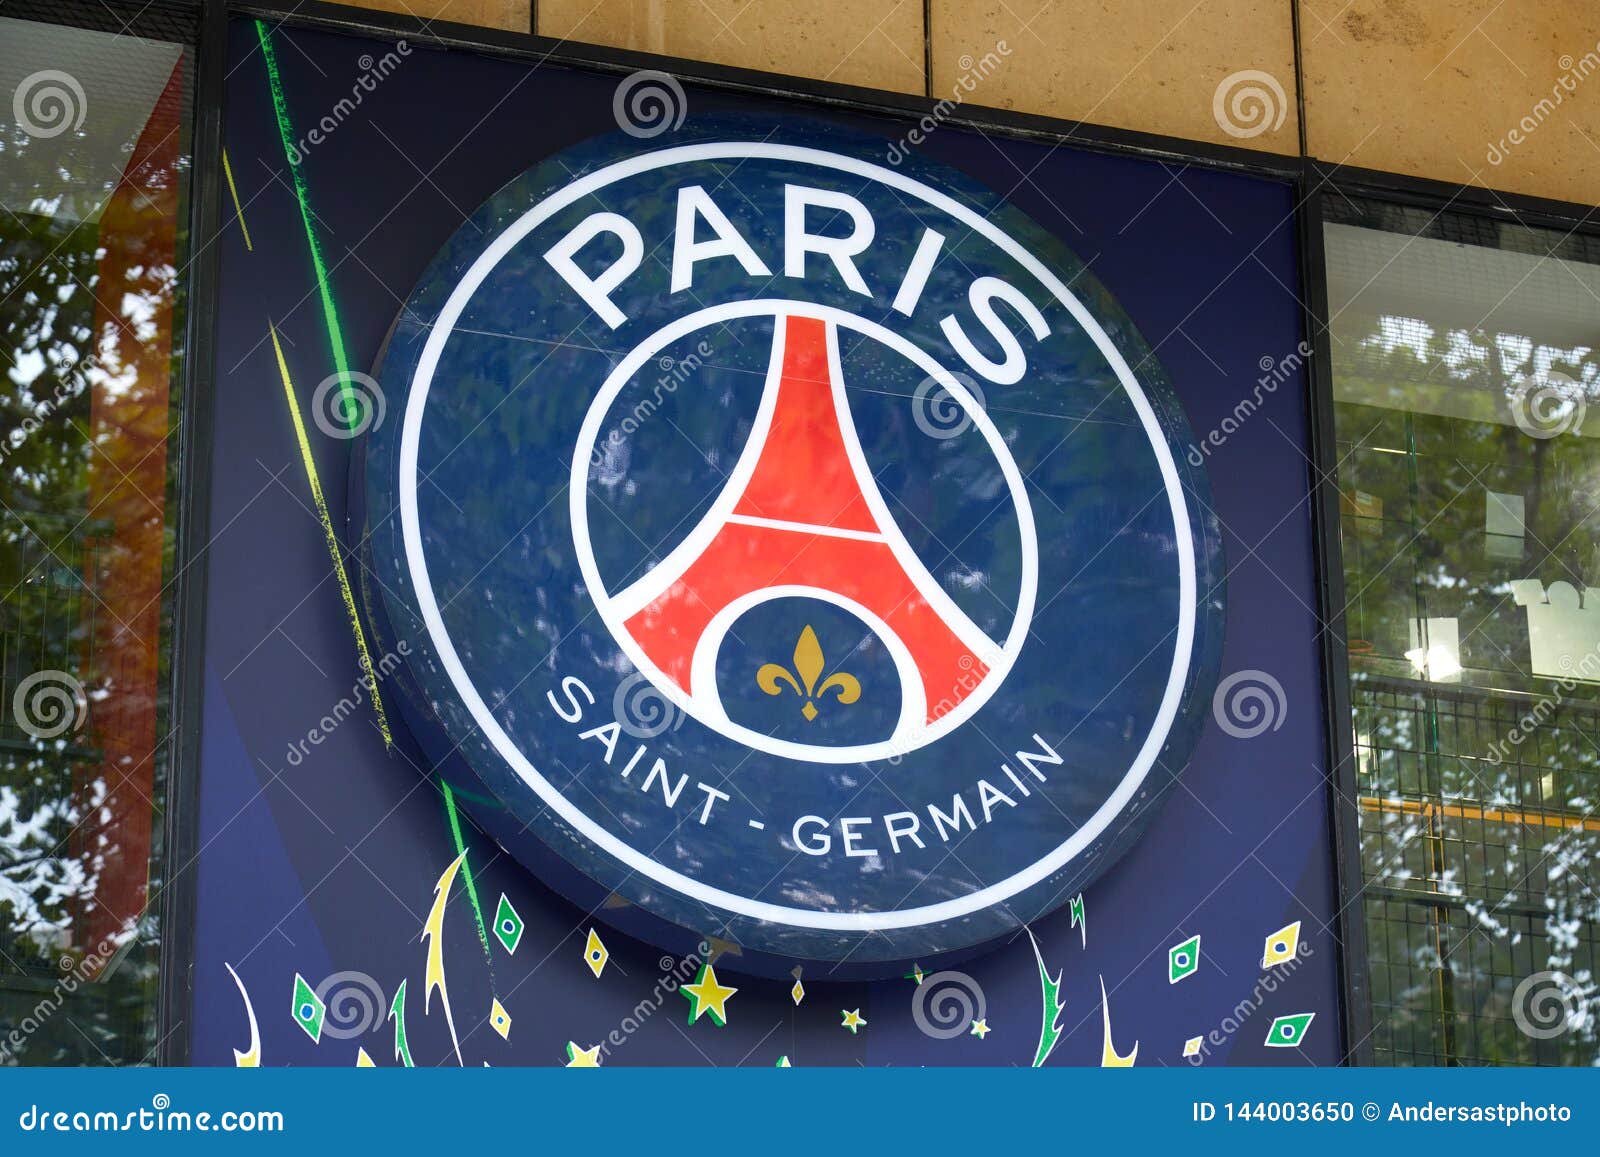 Paris Saint Germain Football Team Store Sign in Champs Elysees in Paris, France Editorial Image of display, merchandise: 144003650